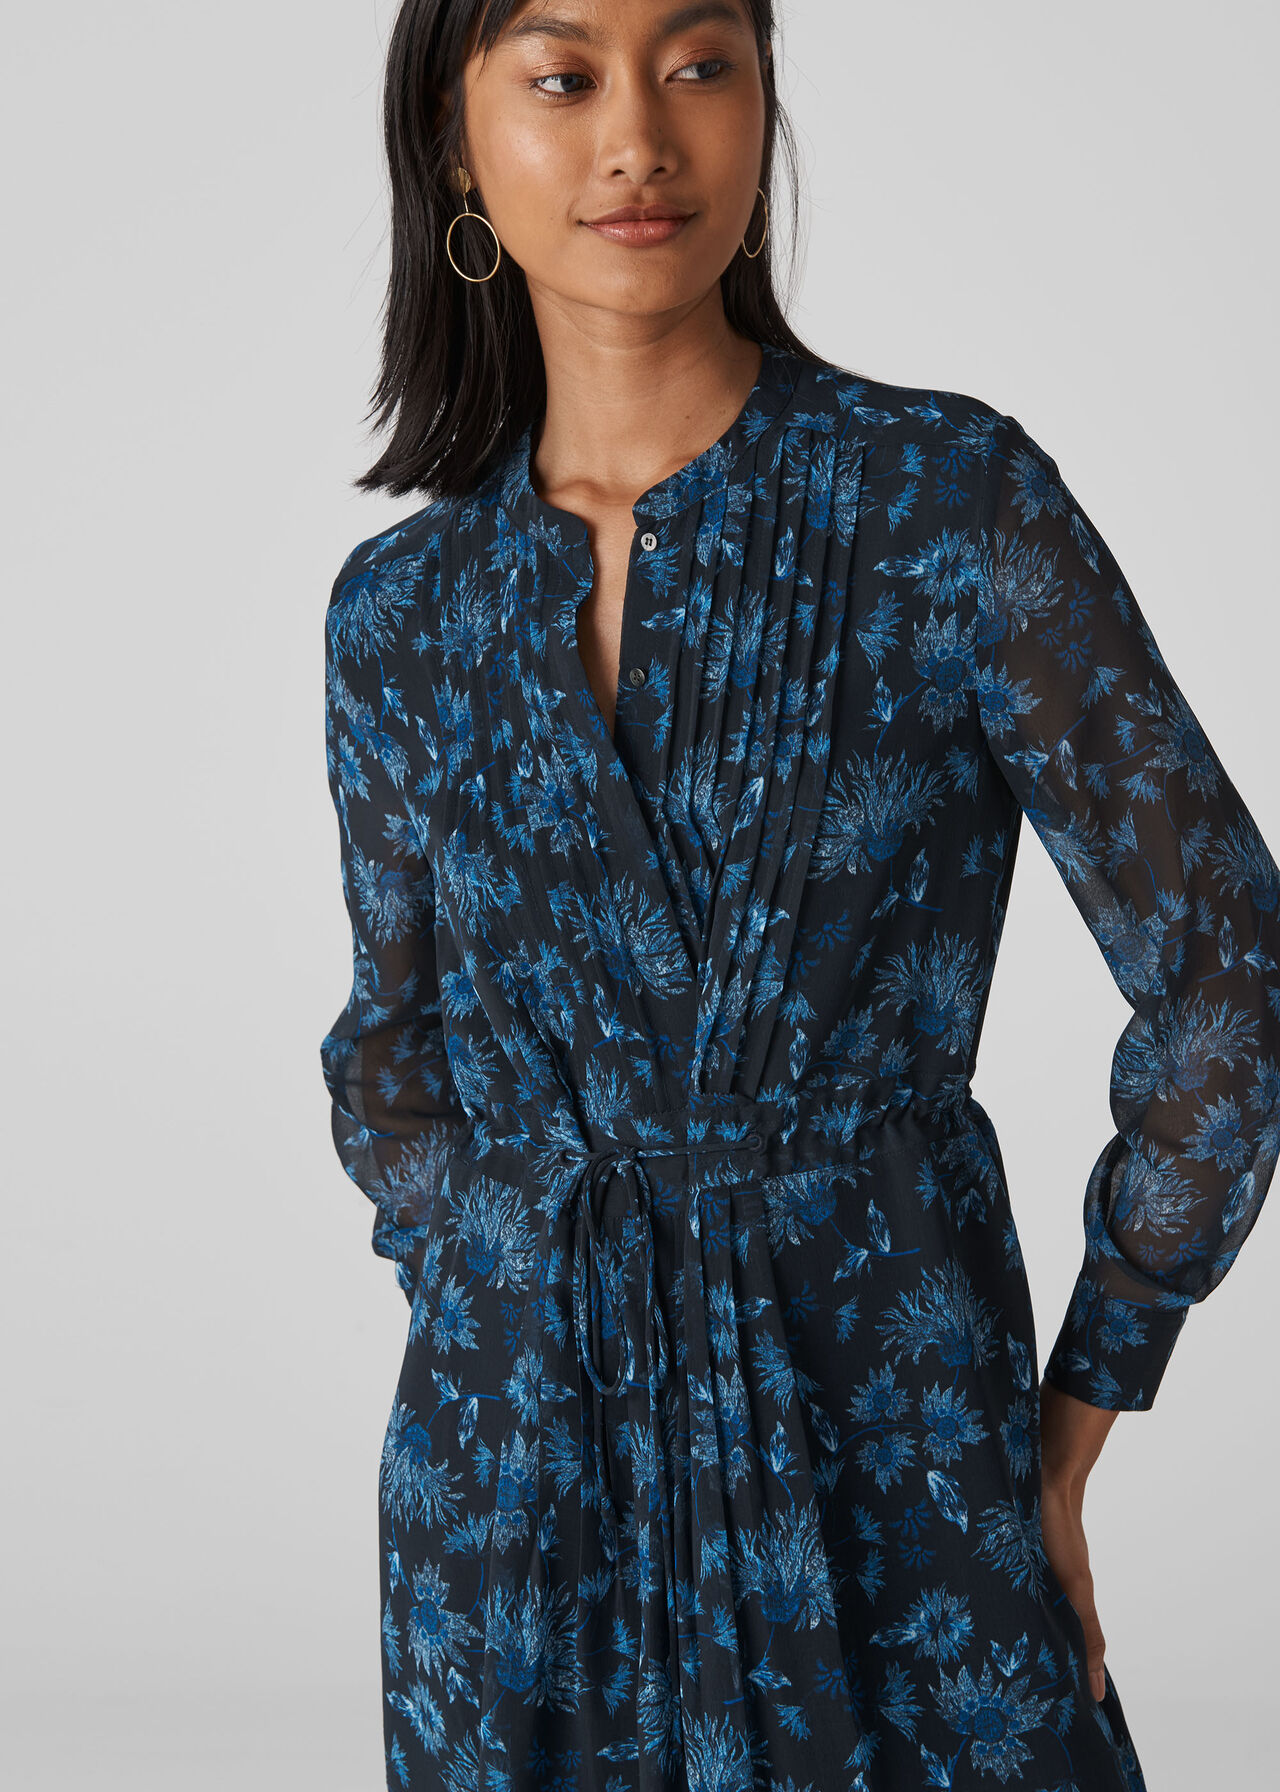 Pitti Print Shirt Dress Blue/Multi